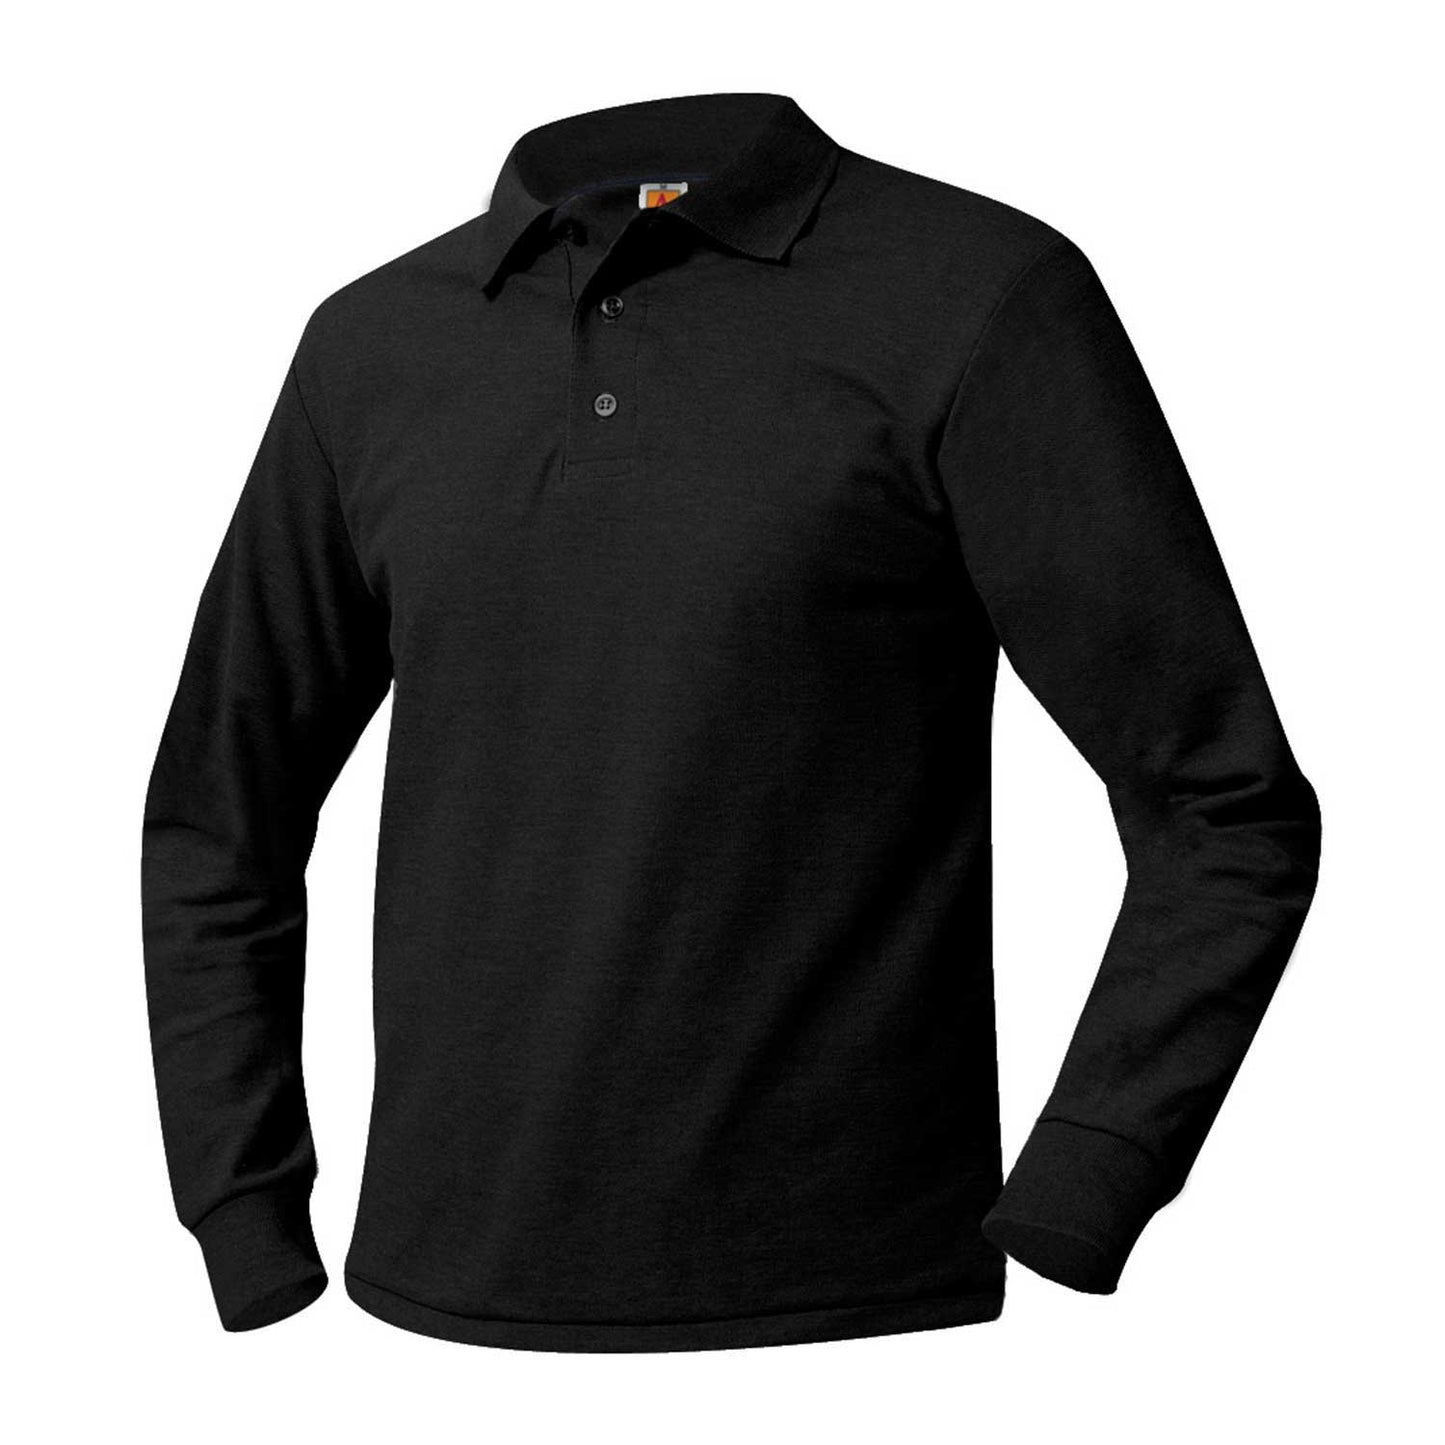 Unisex Pique Polo Shirt, Long Sleeves, Ribbed Cuffs w/Logo - 1113